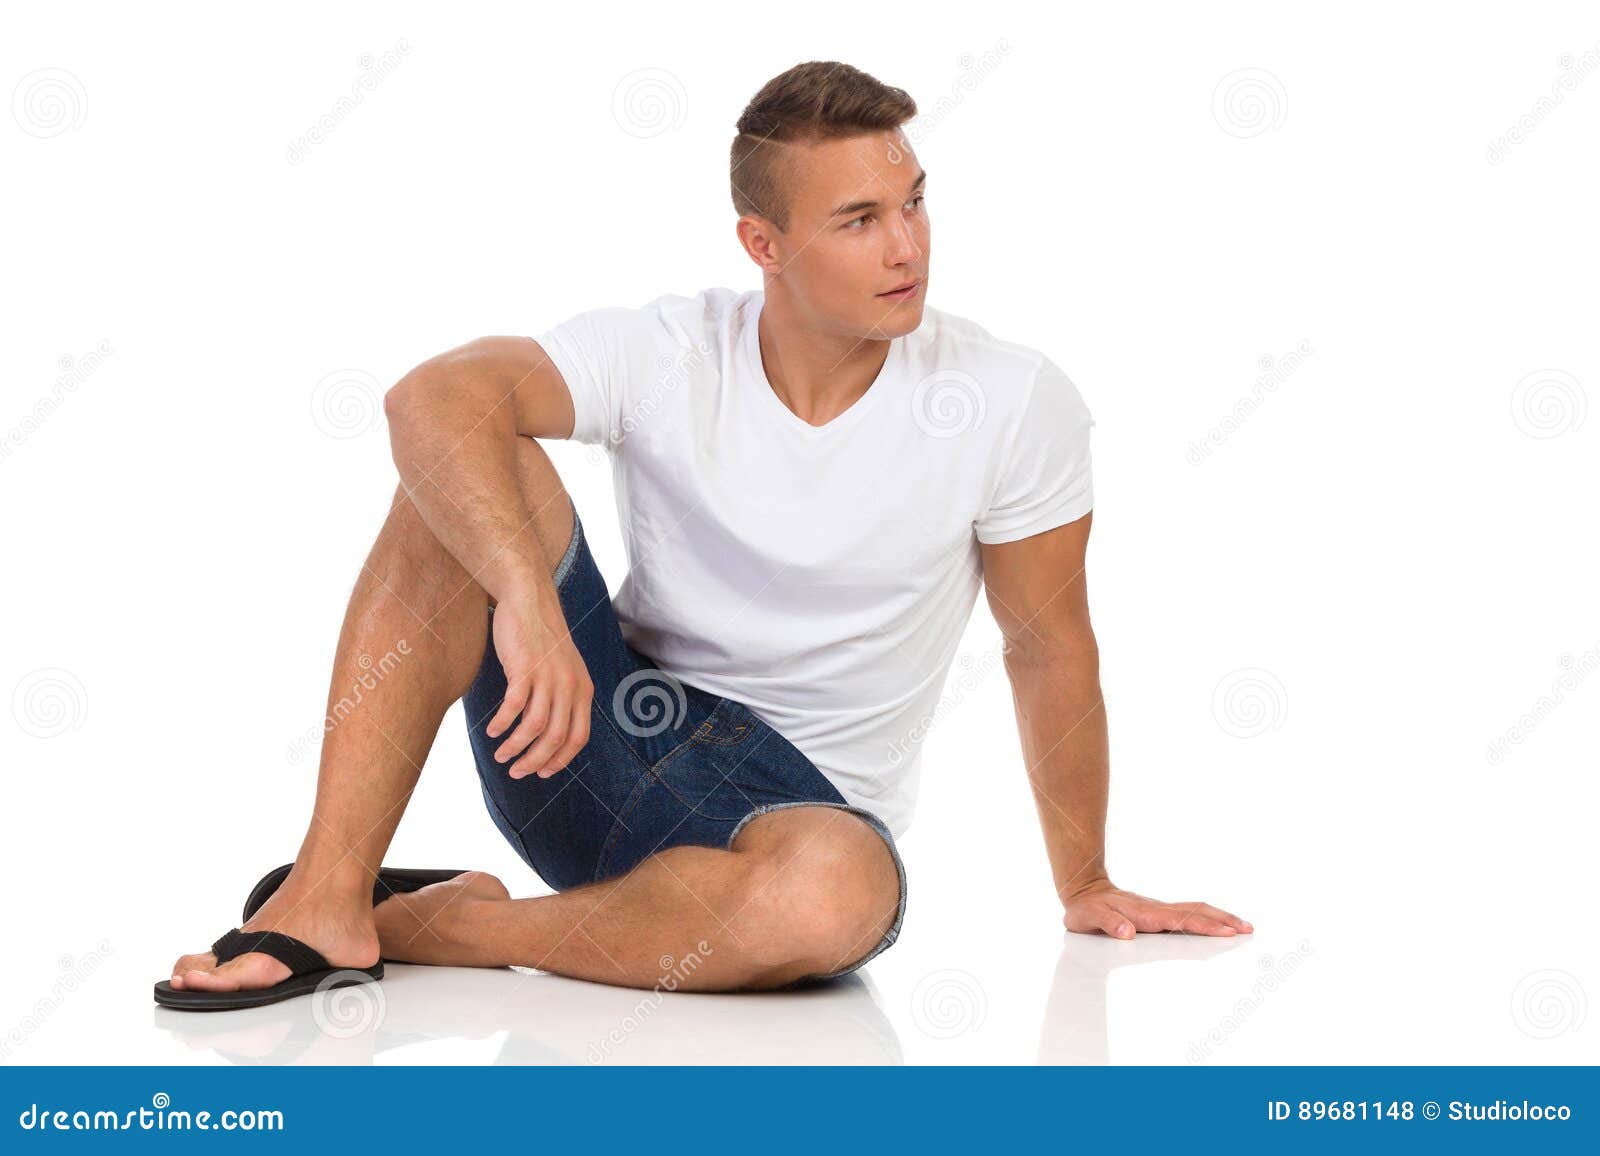 Мужчина лежит нога на ногу. Человек сидит на полу. Мужчина сидит на полу. Мужчина сидя на полу. Человек сидит в шортах.